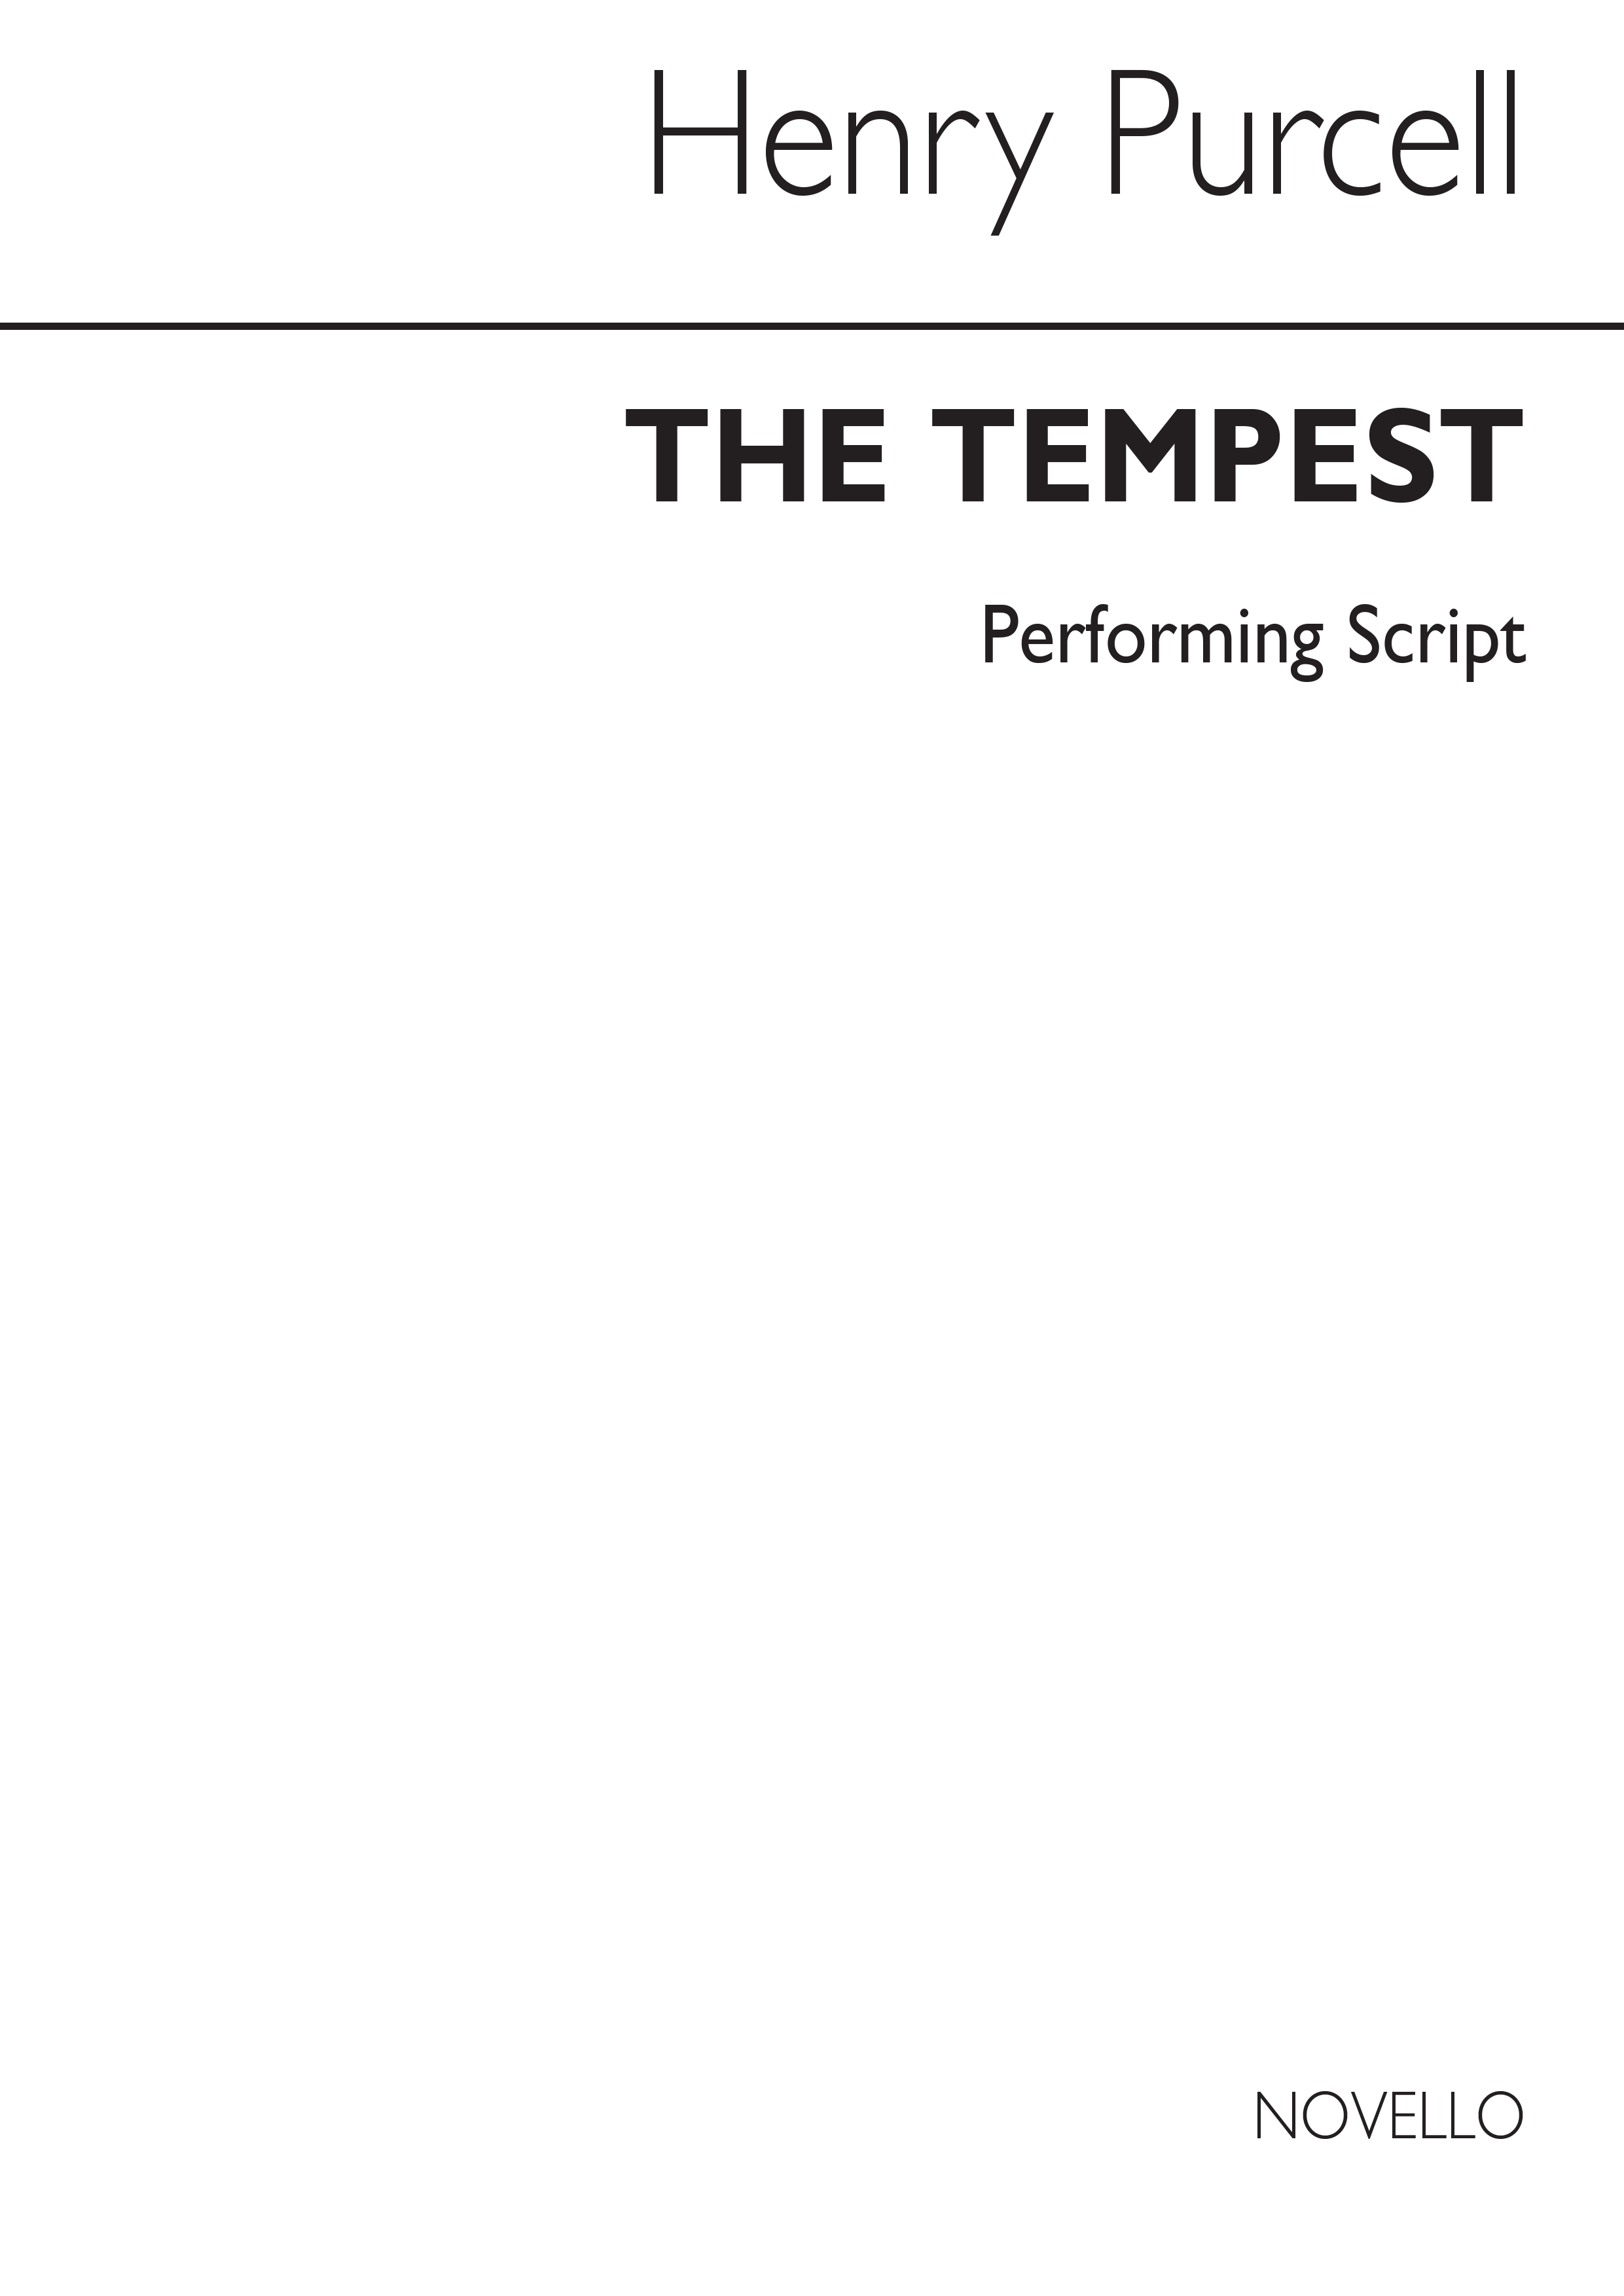 Tempest Performing Script Book: Biography